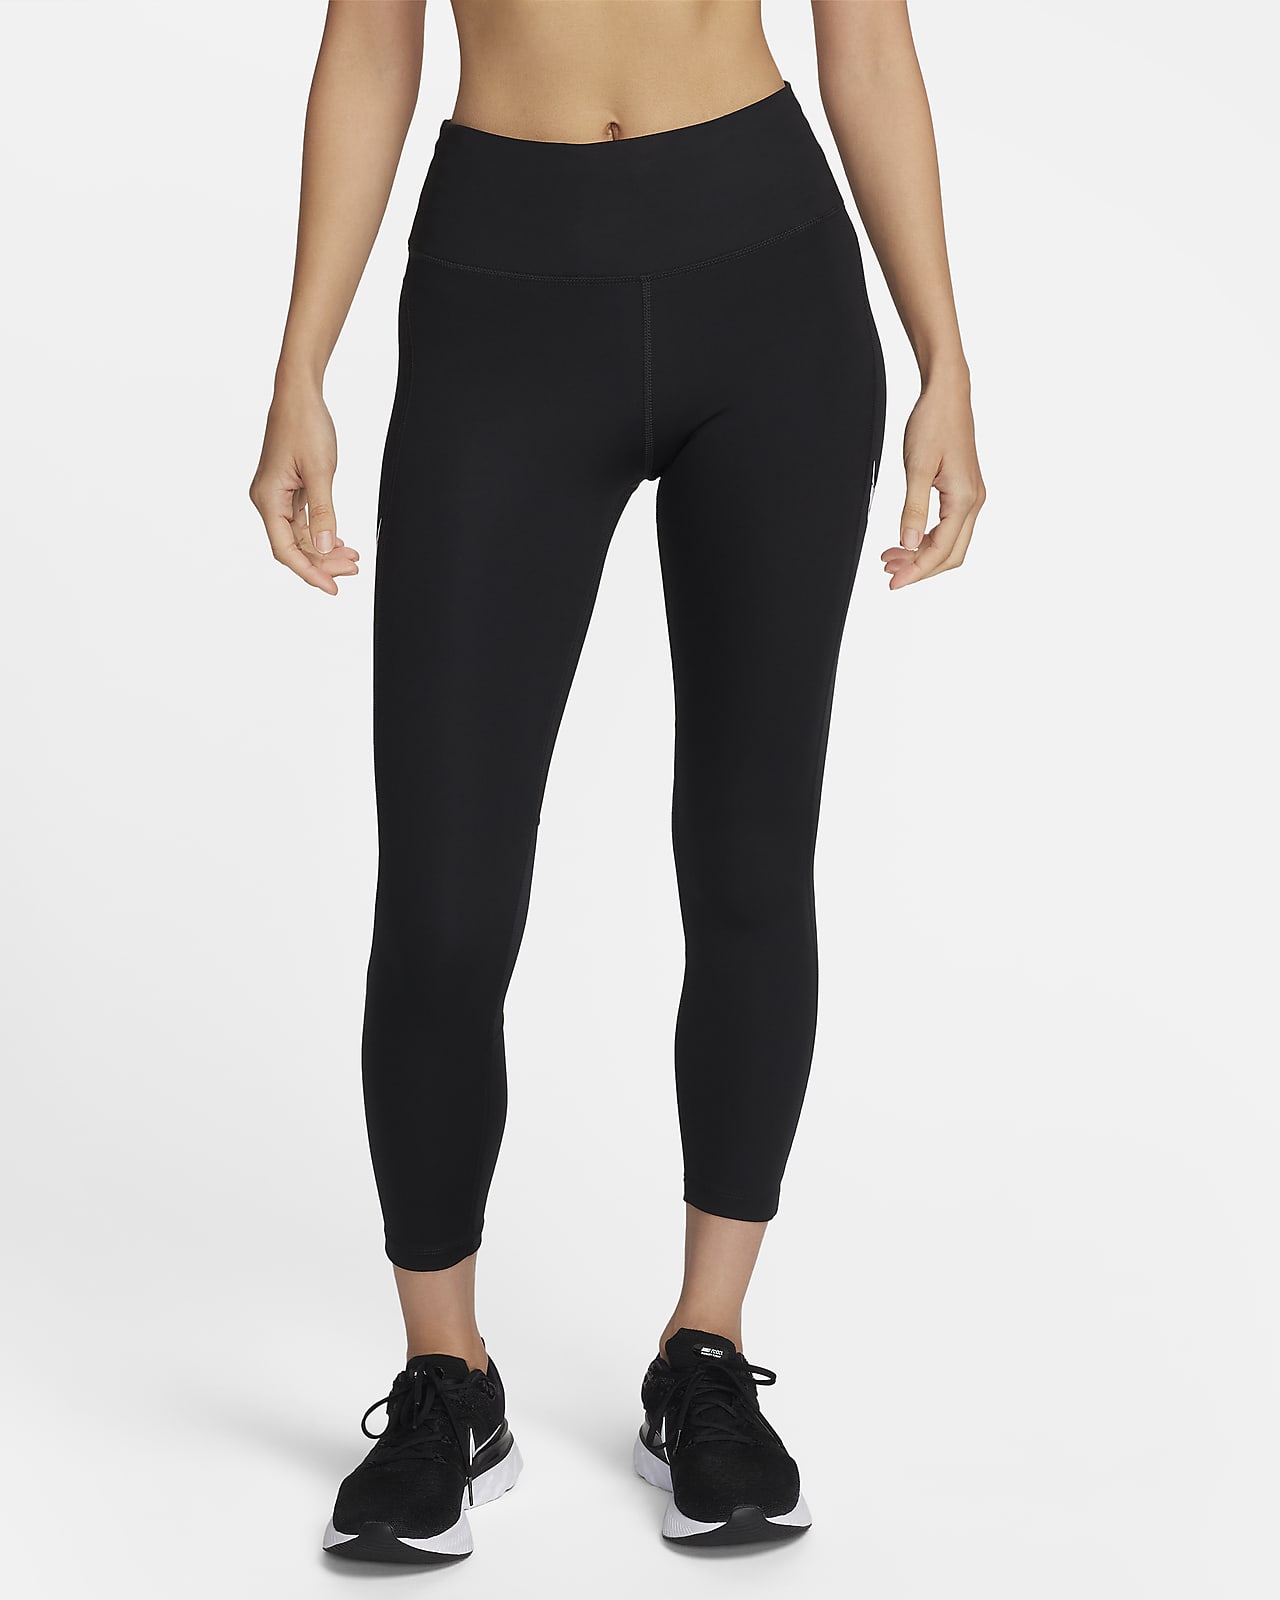 Women's Pockets Tights & Leggings. Nike UK